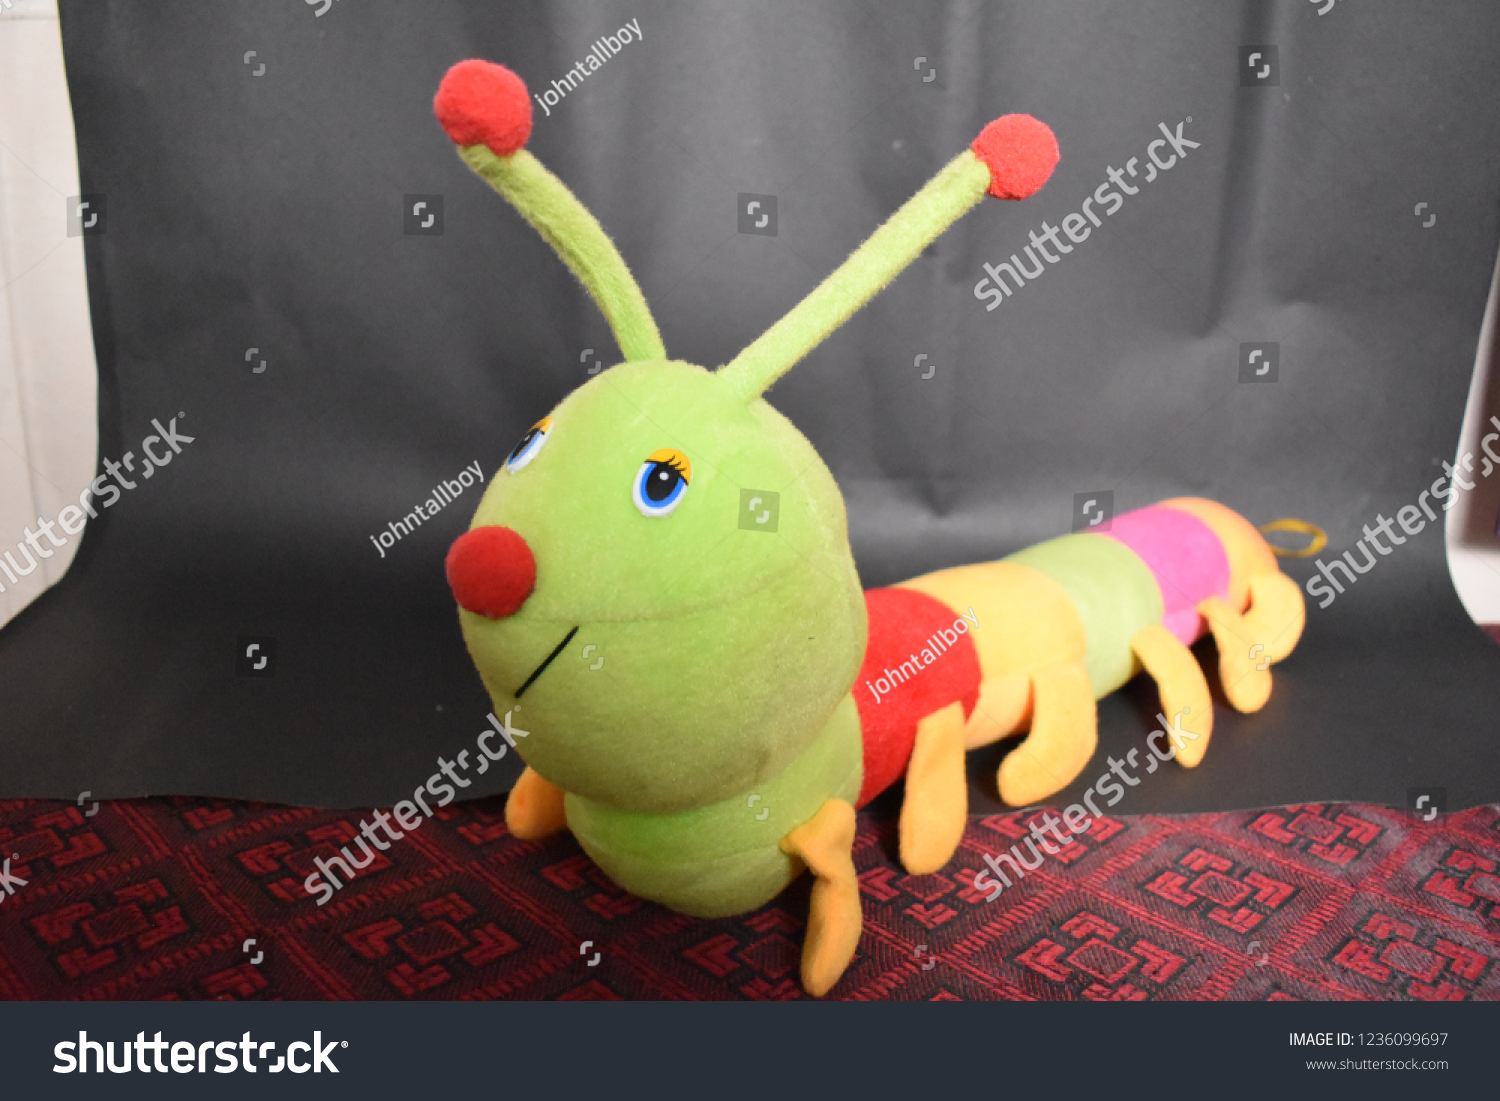 soft caterpillar toy